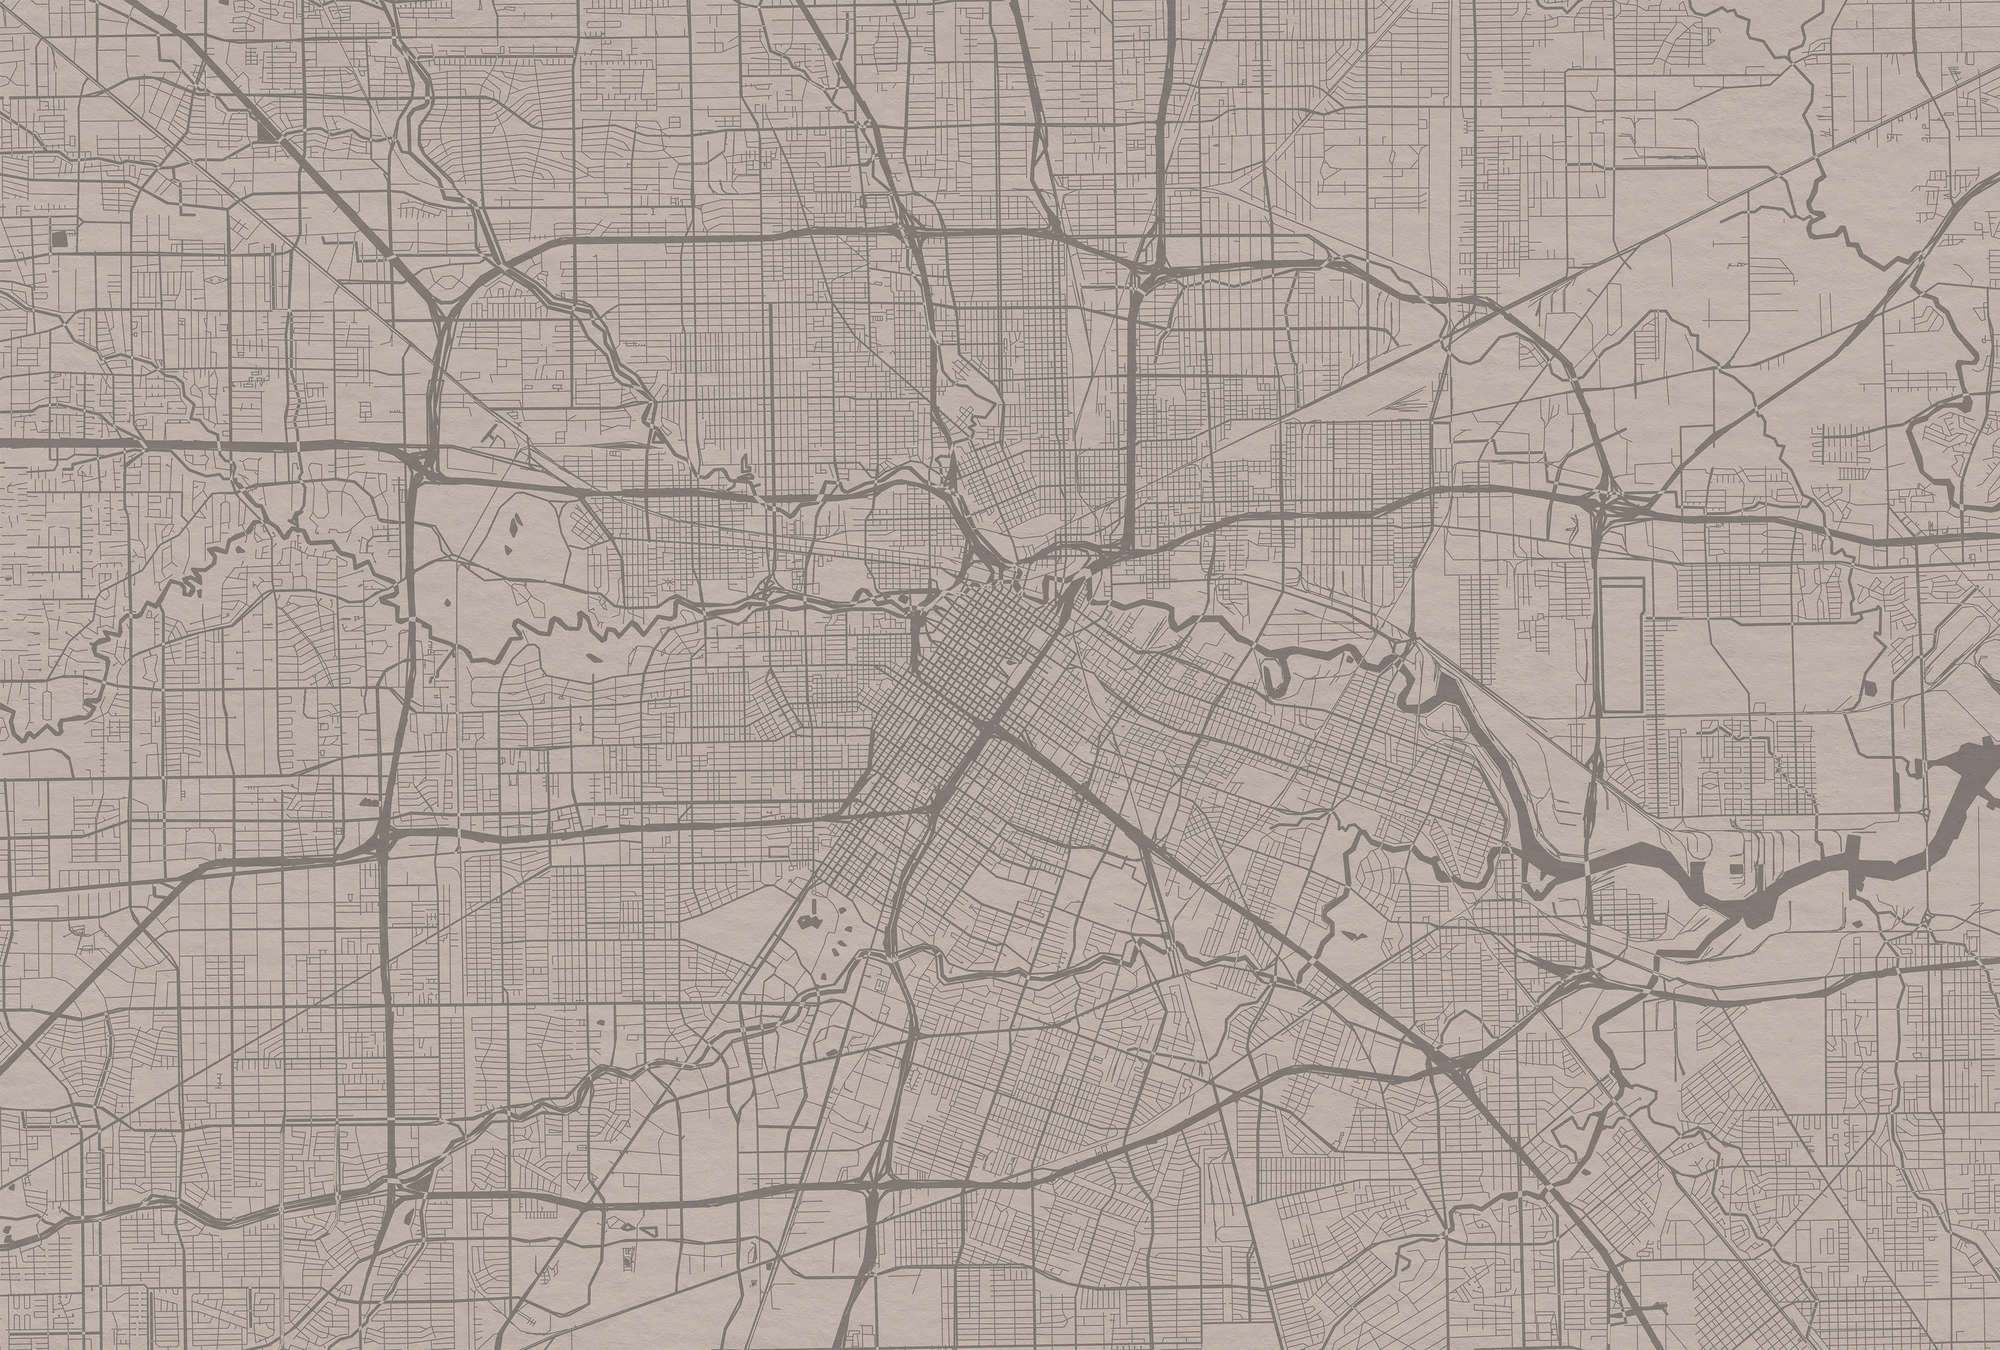             Fototapete Stadtkarte mit Straßenverlauf – Grau
        